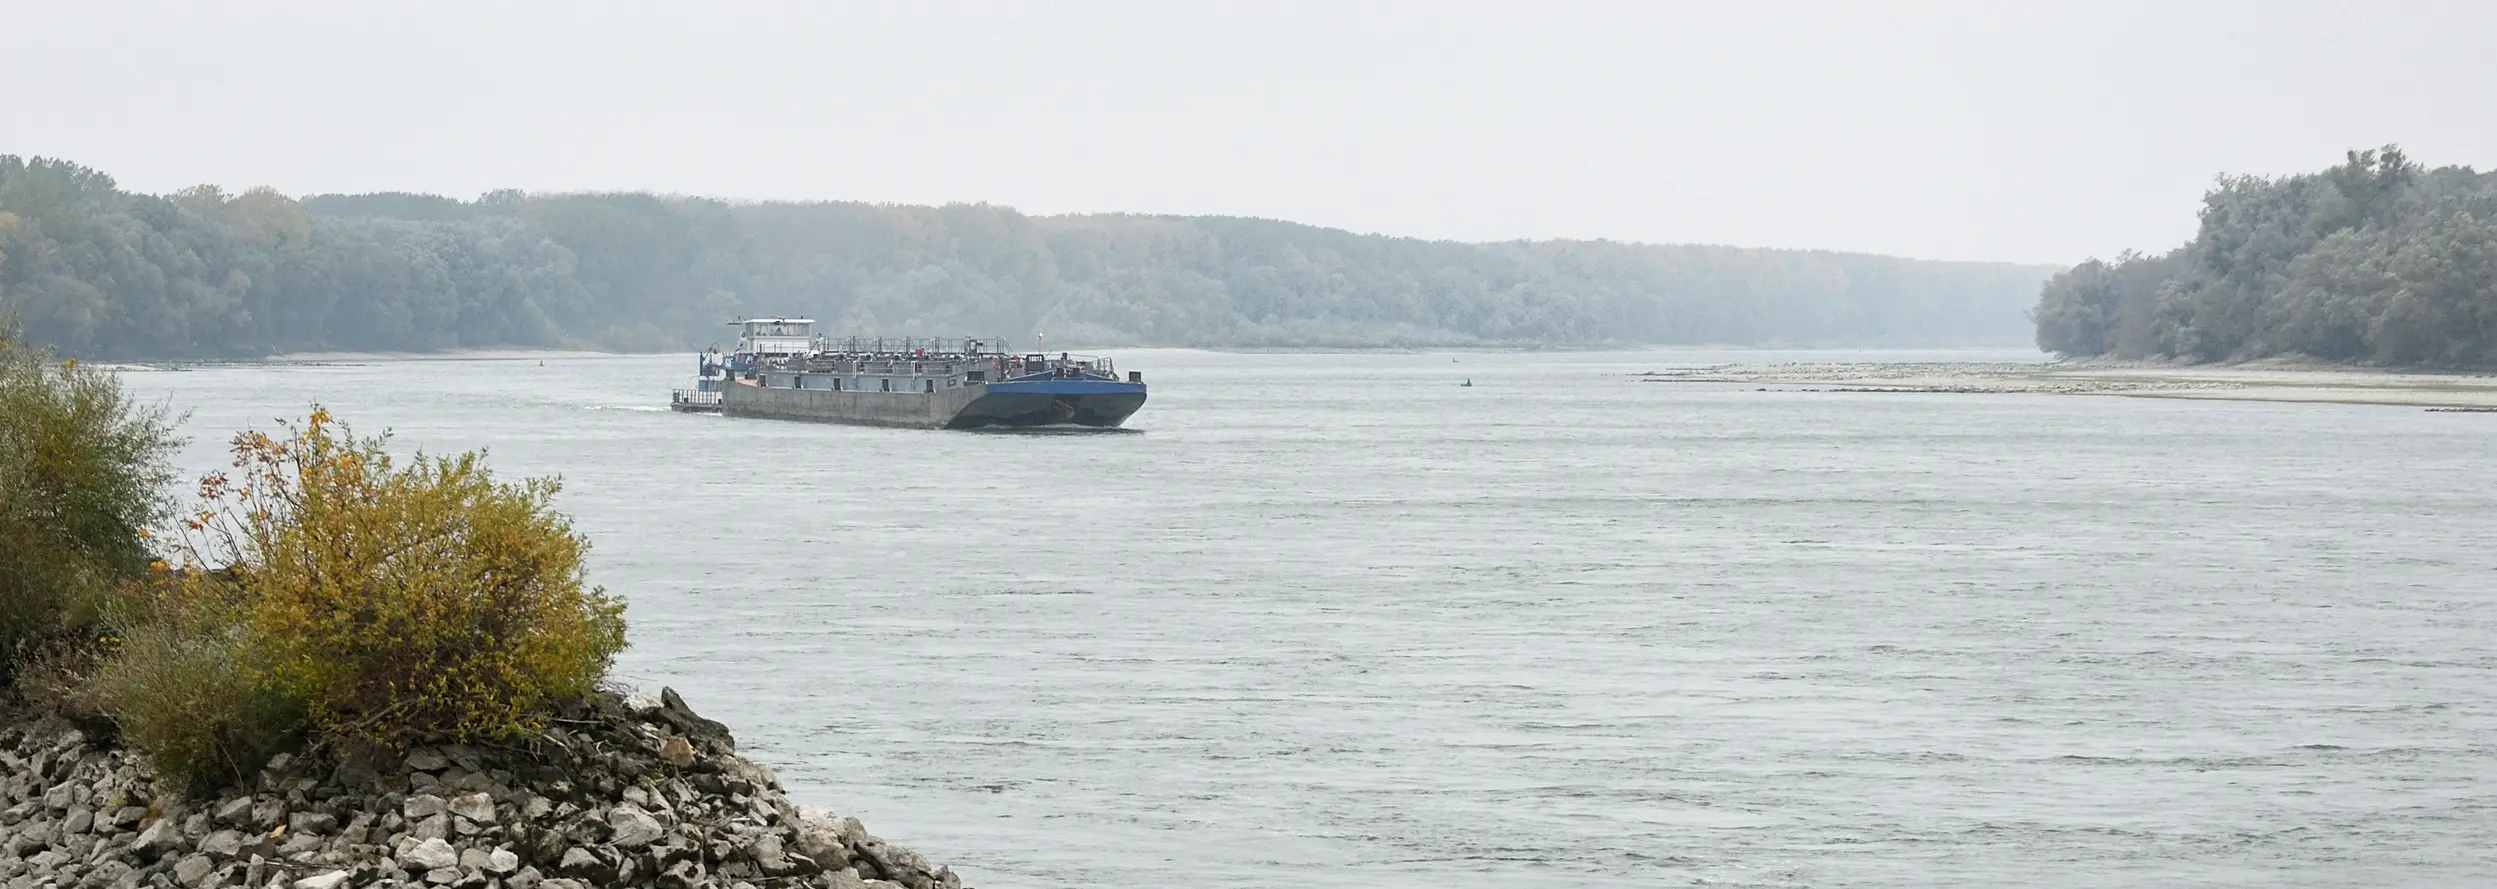 Cargo vessel on the danube river